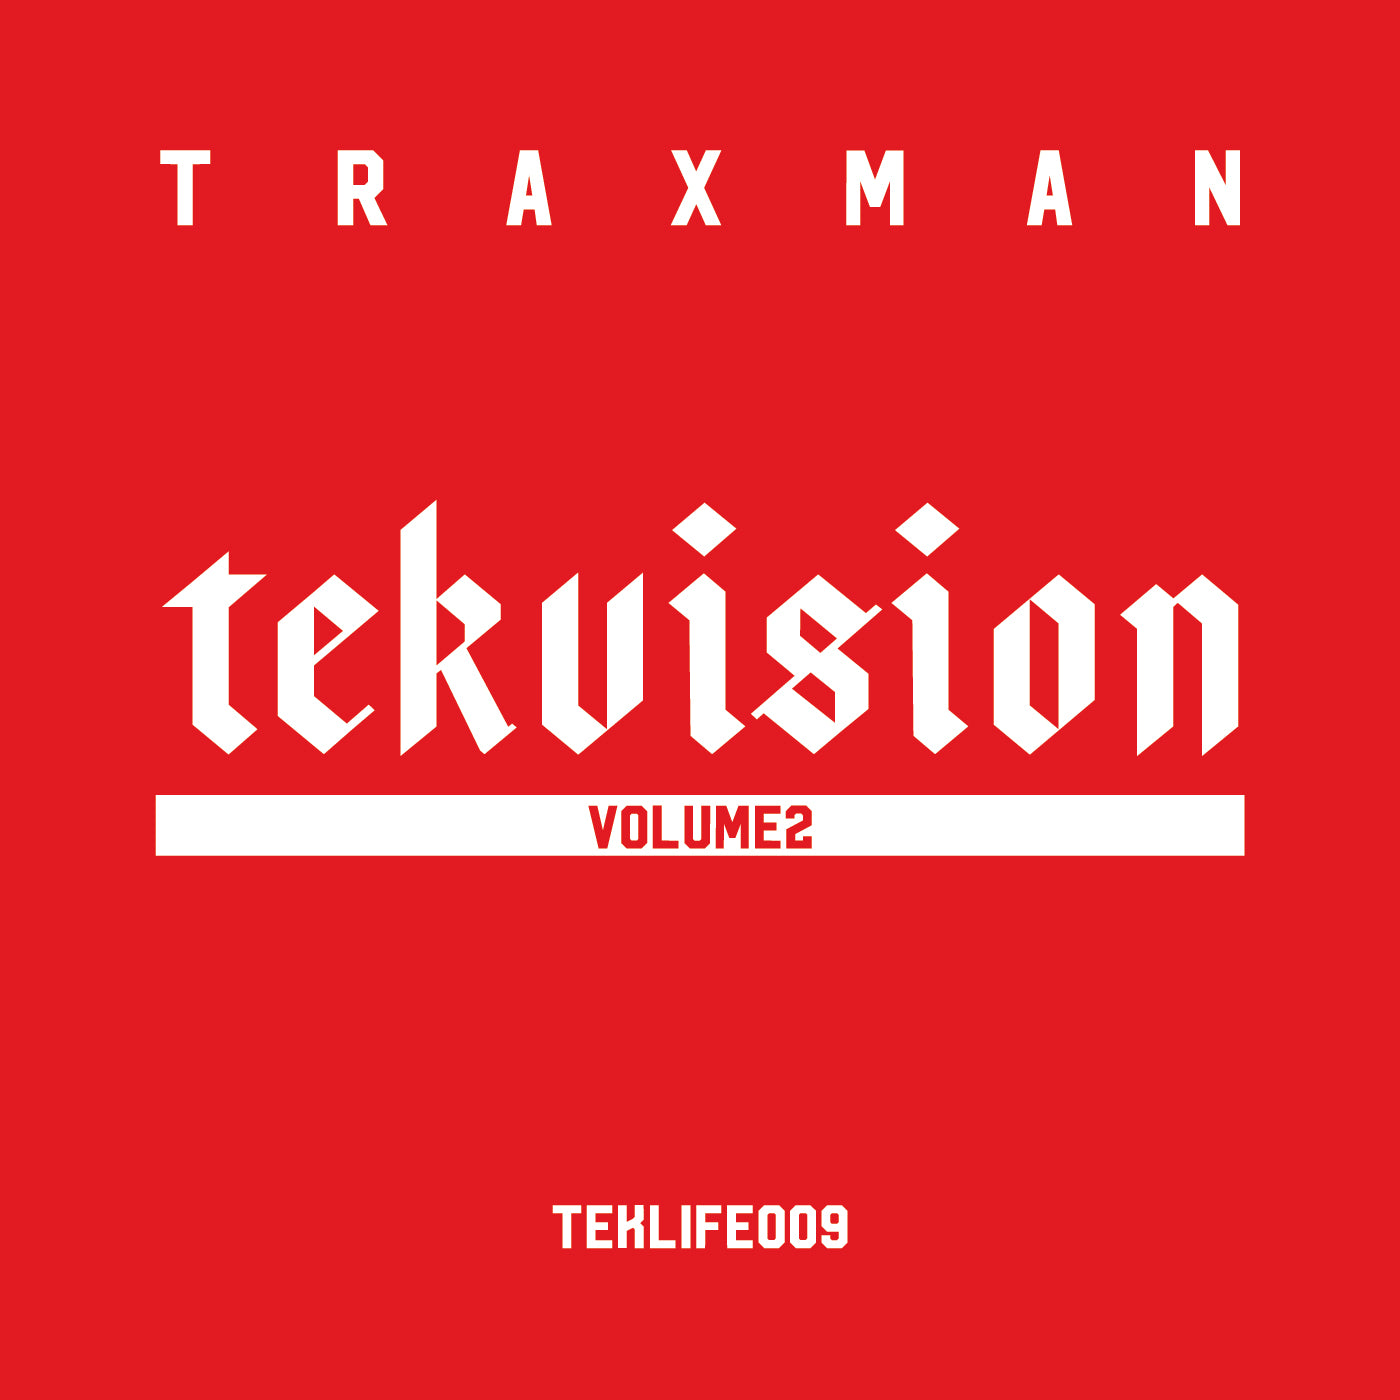 TRAXMAN 'TEKVISION - VOL.2' 12"